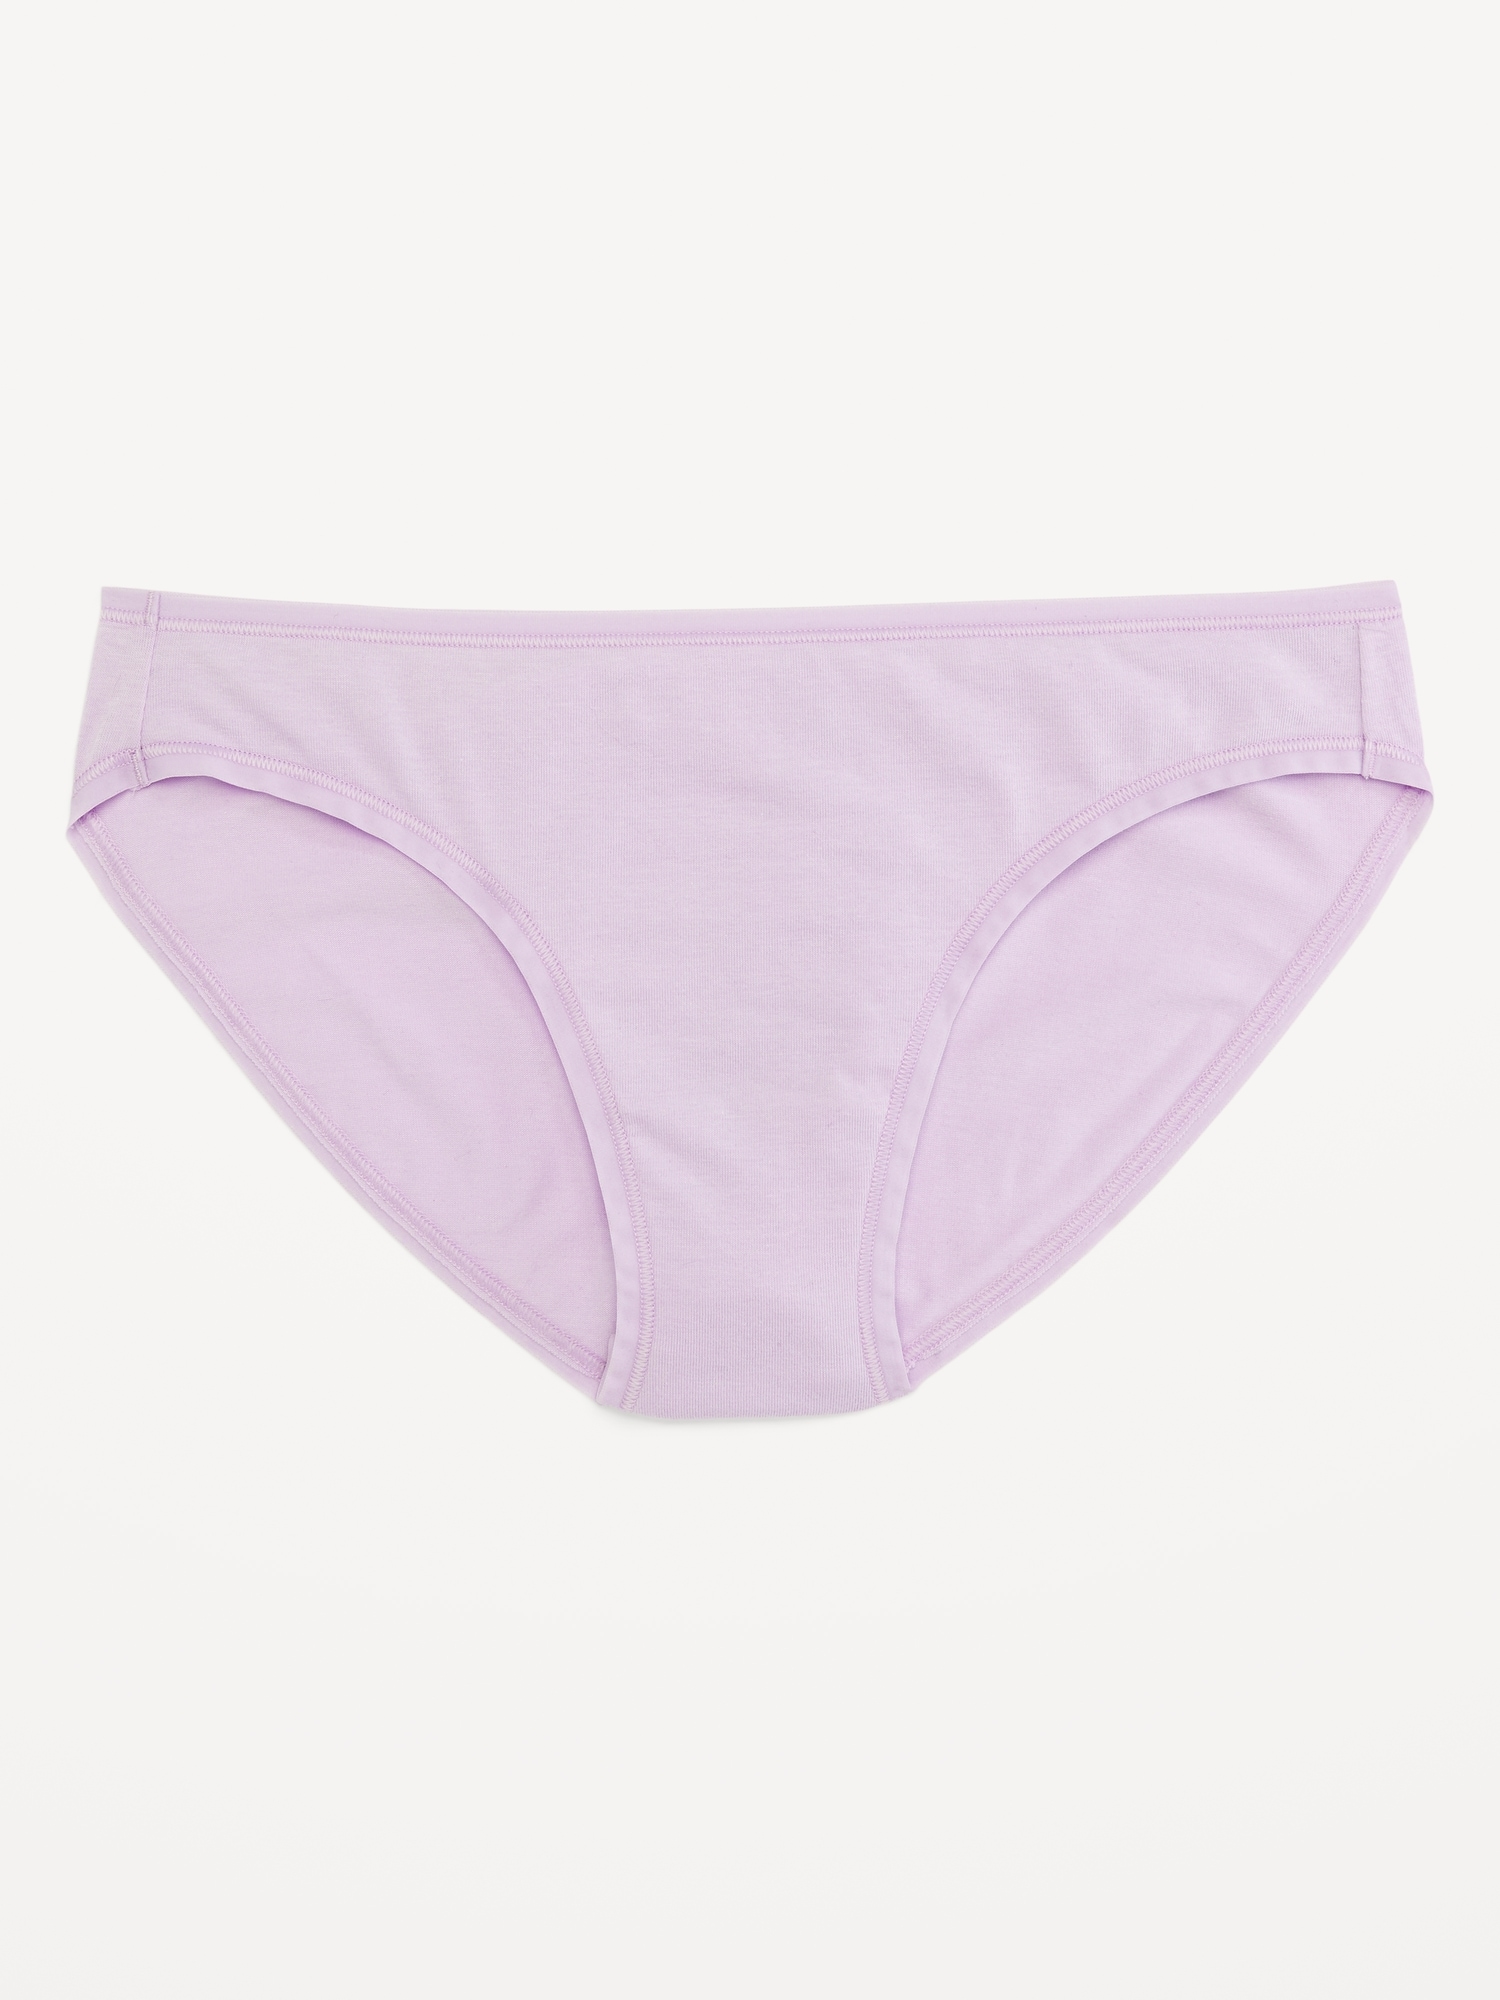 UnderWhere? Women's 95% Cotton Bikini Underwear Panties (3Pr